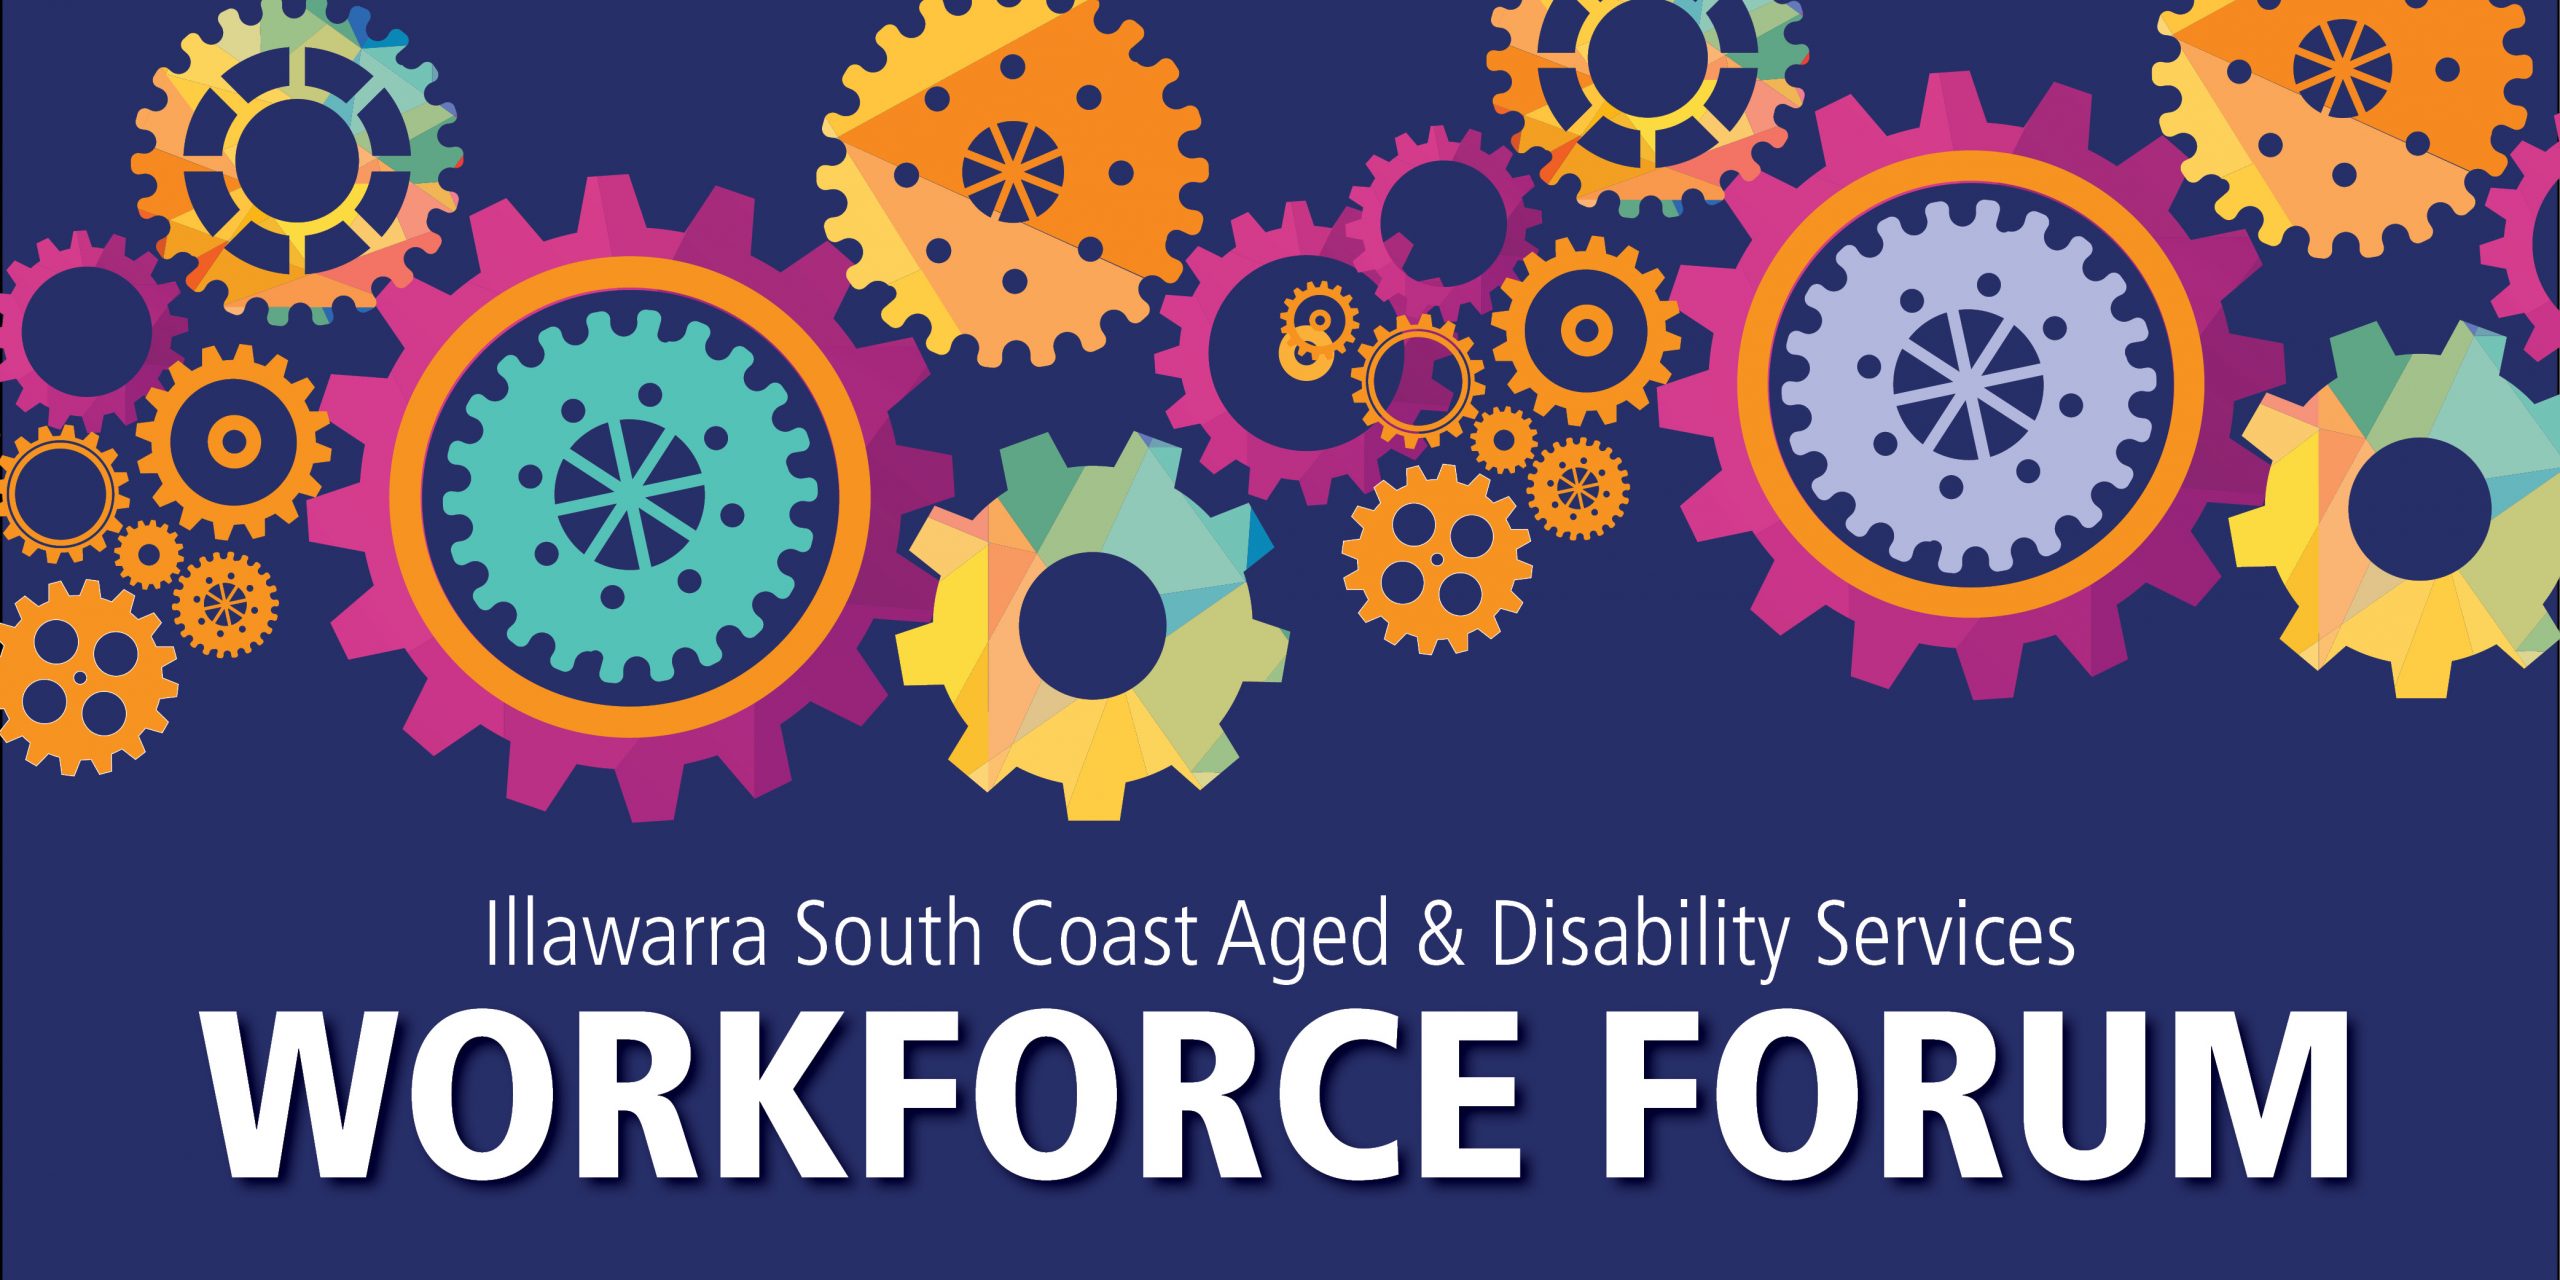 Illawarra South Coast Aged & Disability Services Workforce Forum